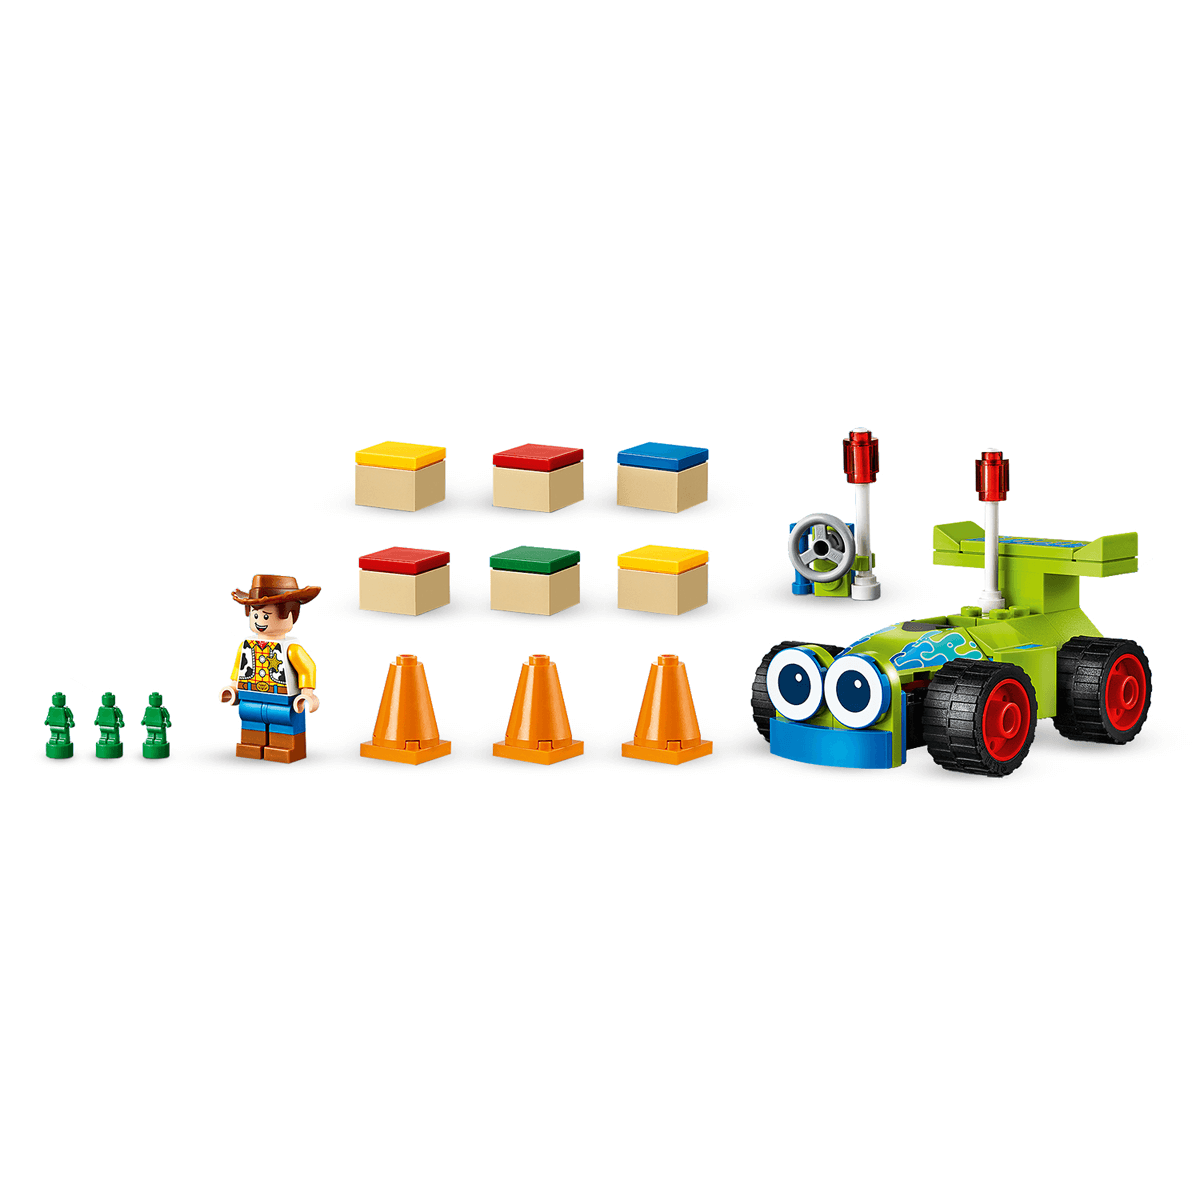 LEGO Disney Pixar Toy Story 4 Woody's Vehicle - 10766